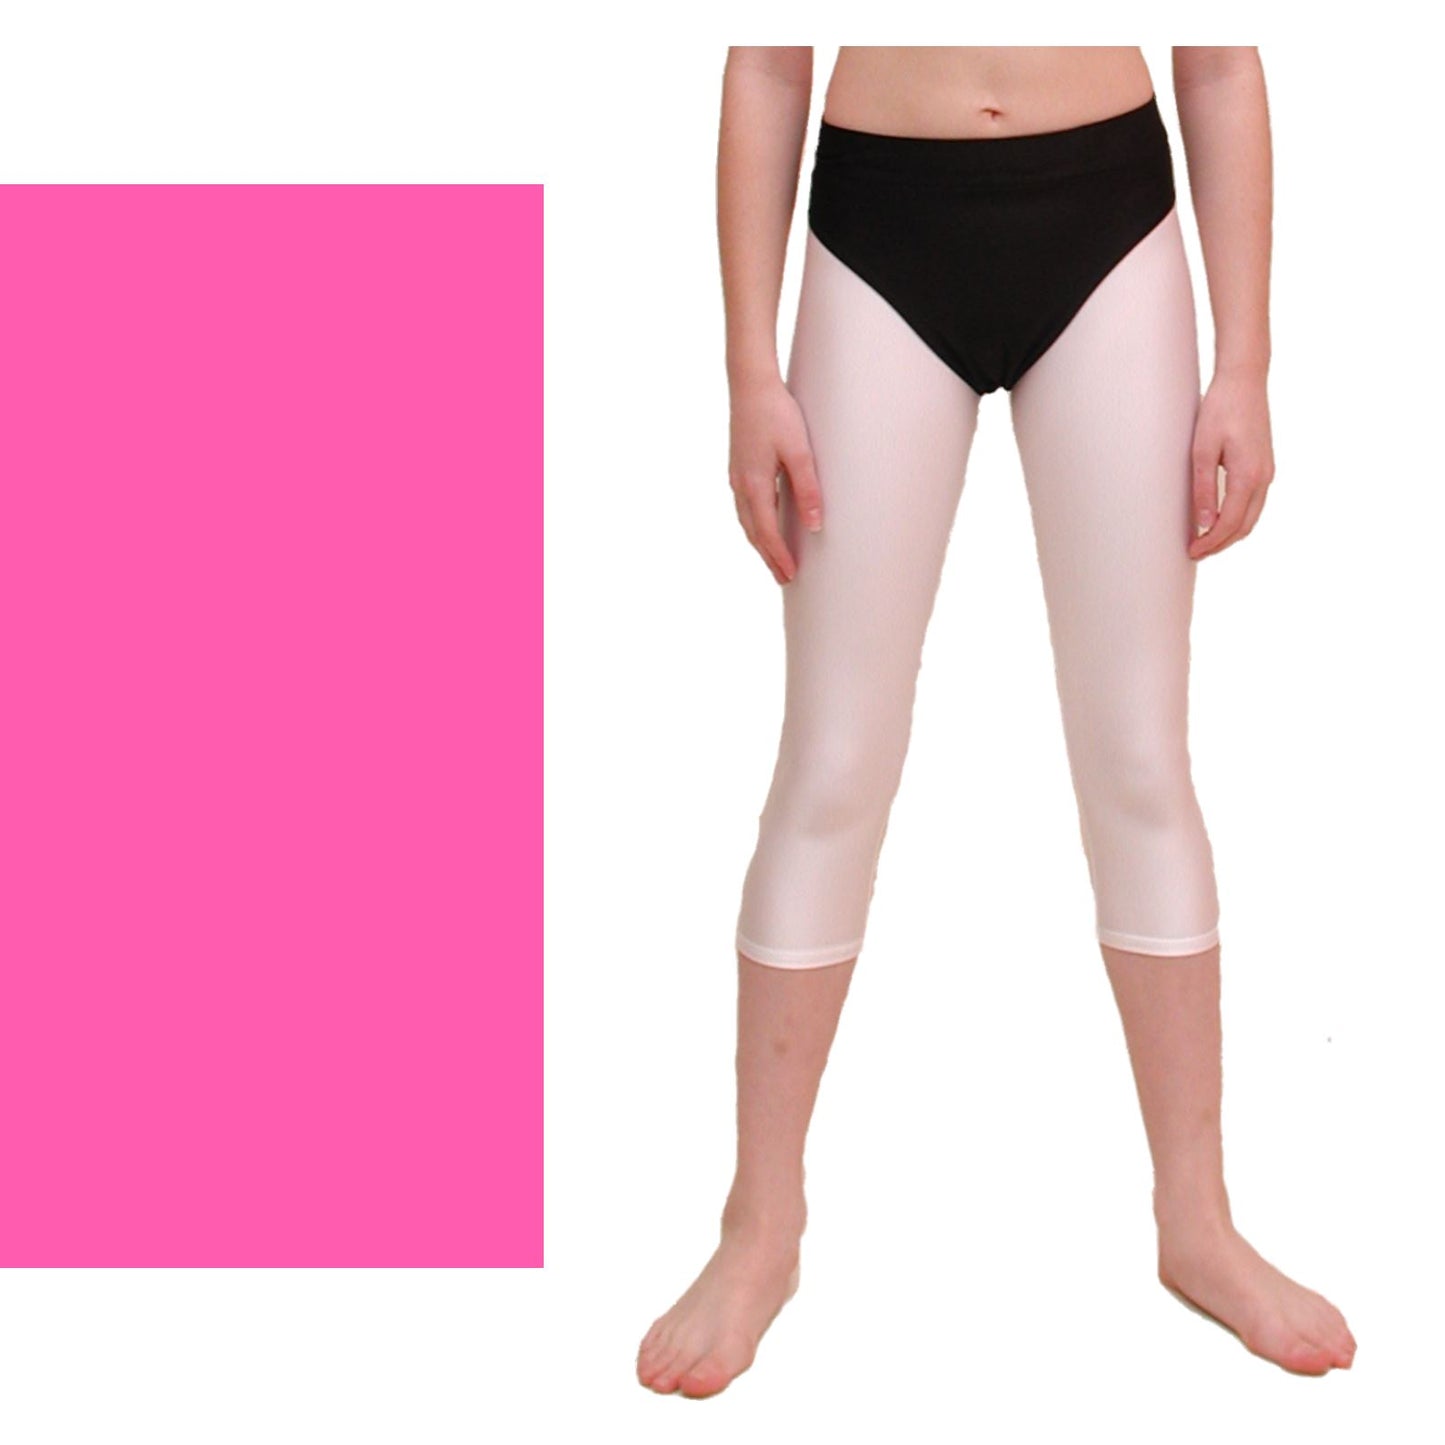 ZOE - HI-CUT DANCE PANTS WITH FULL BACK Children's Dancewear Dancers World Fluorescent Pink 00 (Age 2-4) 